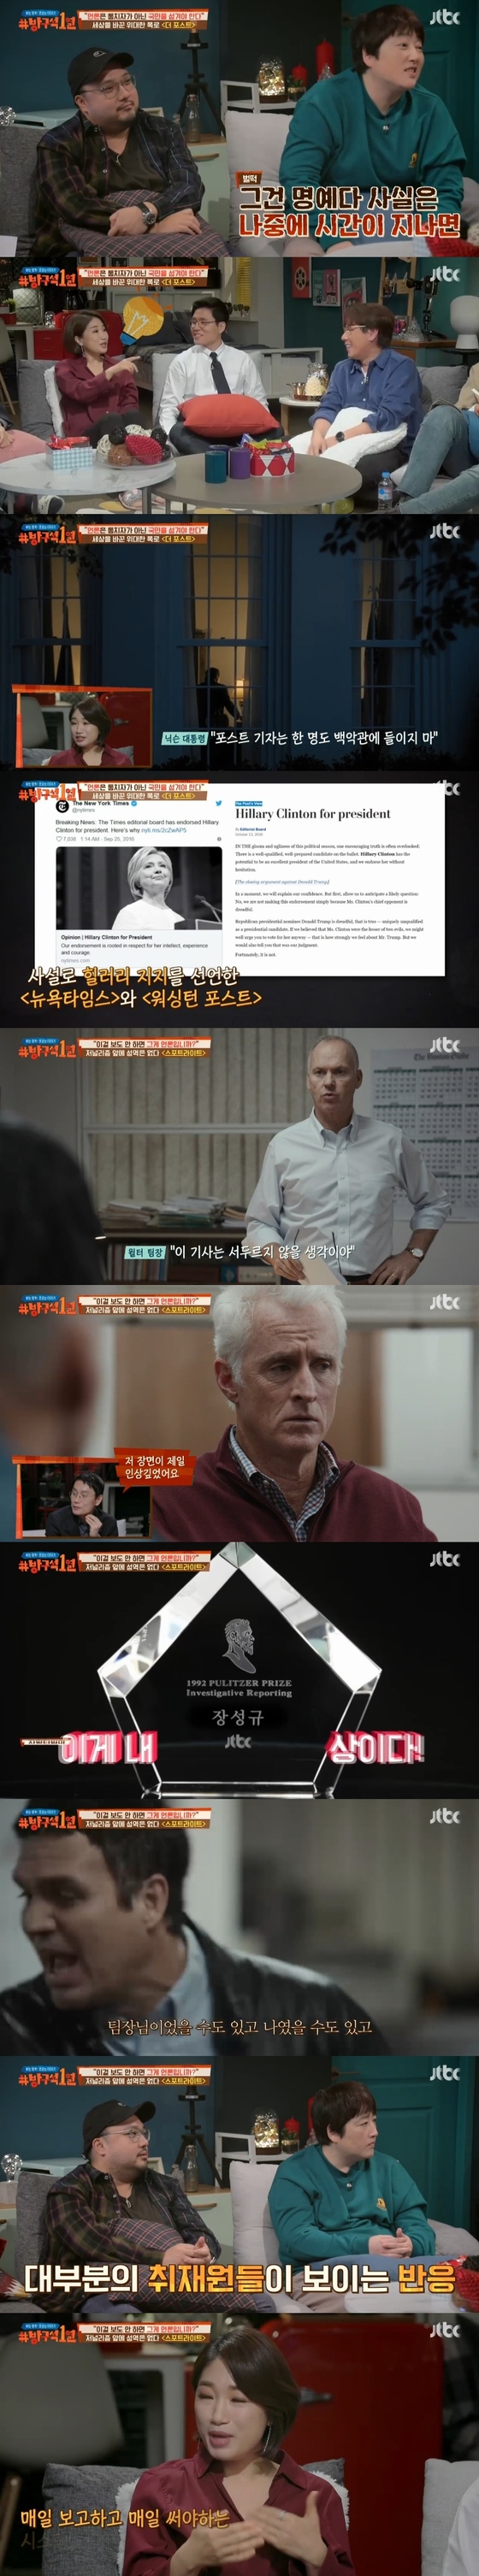 JTBC '방구석1열' 캡처© News1